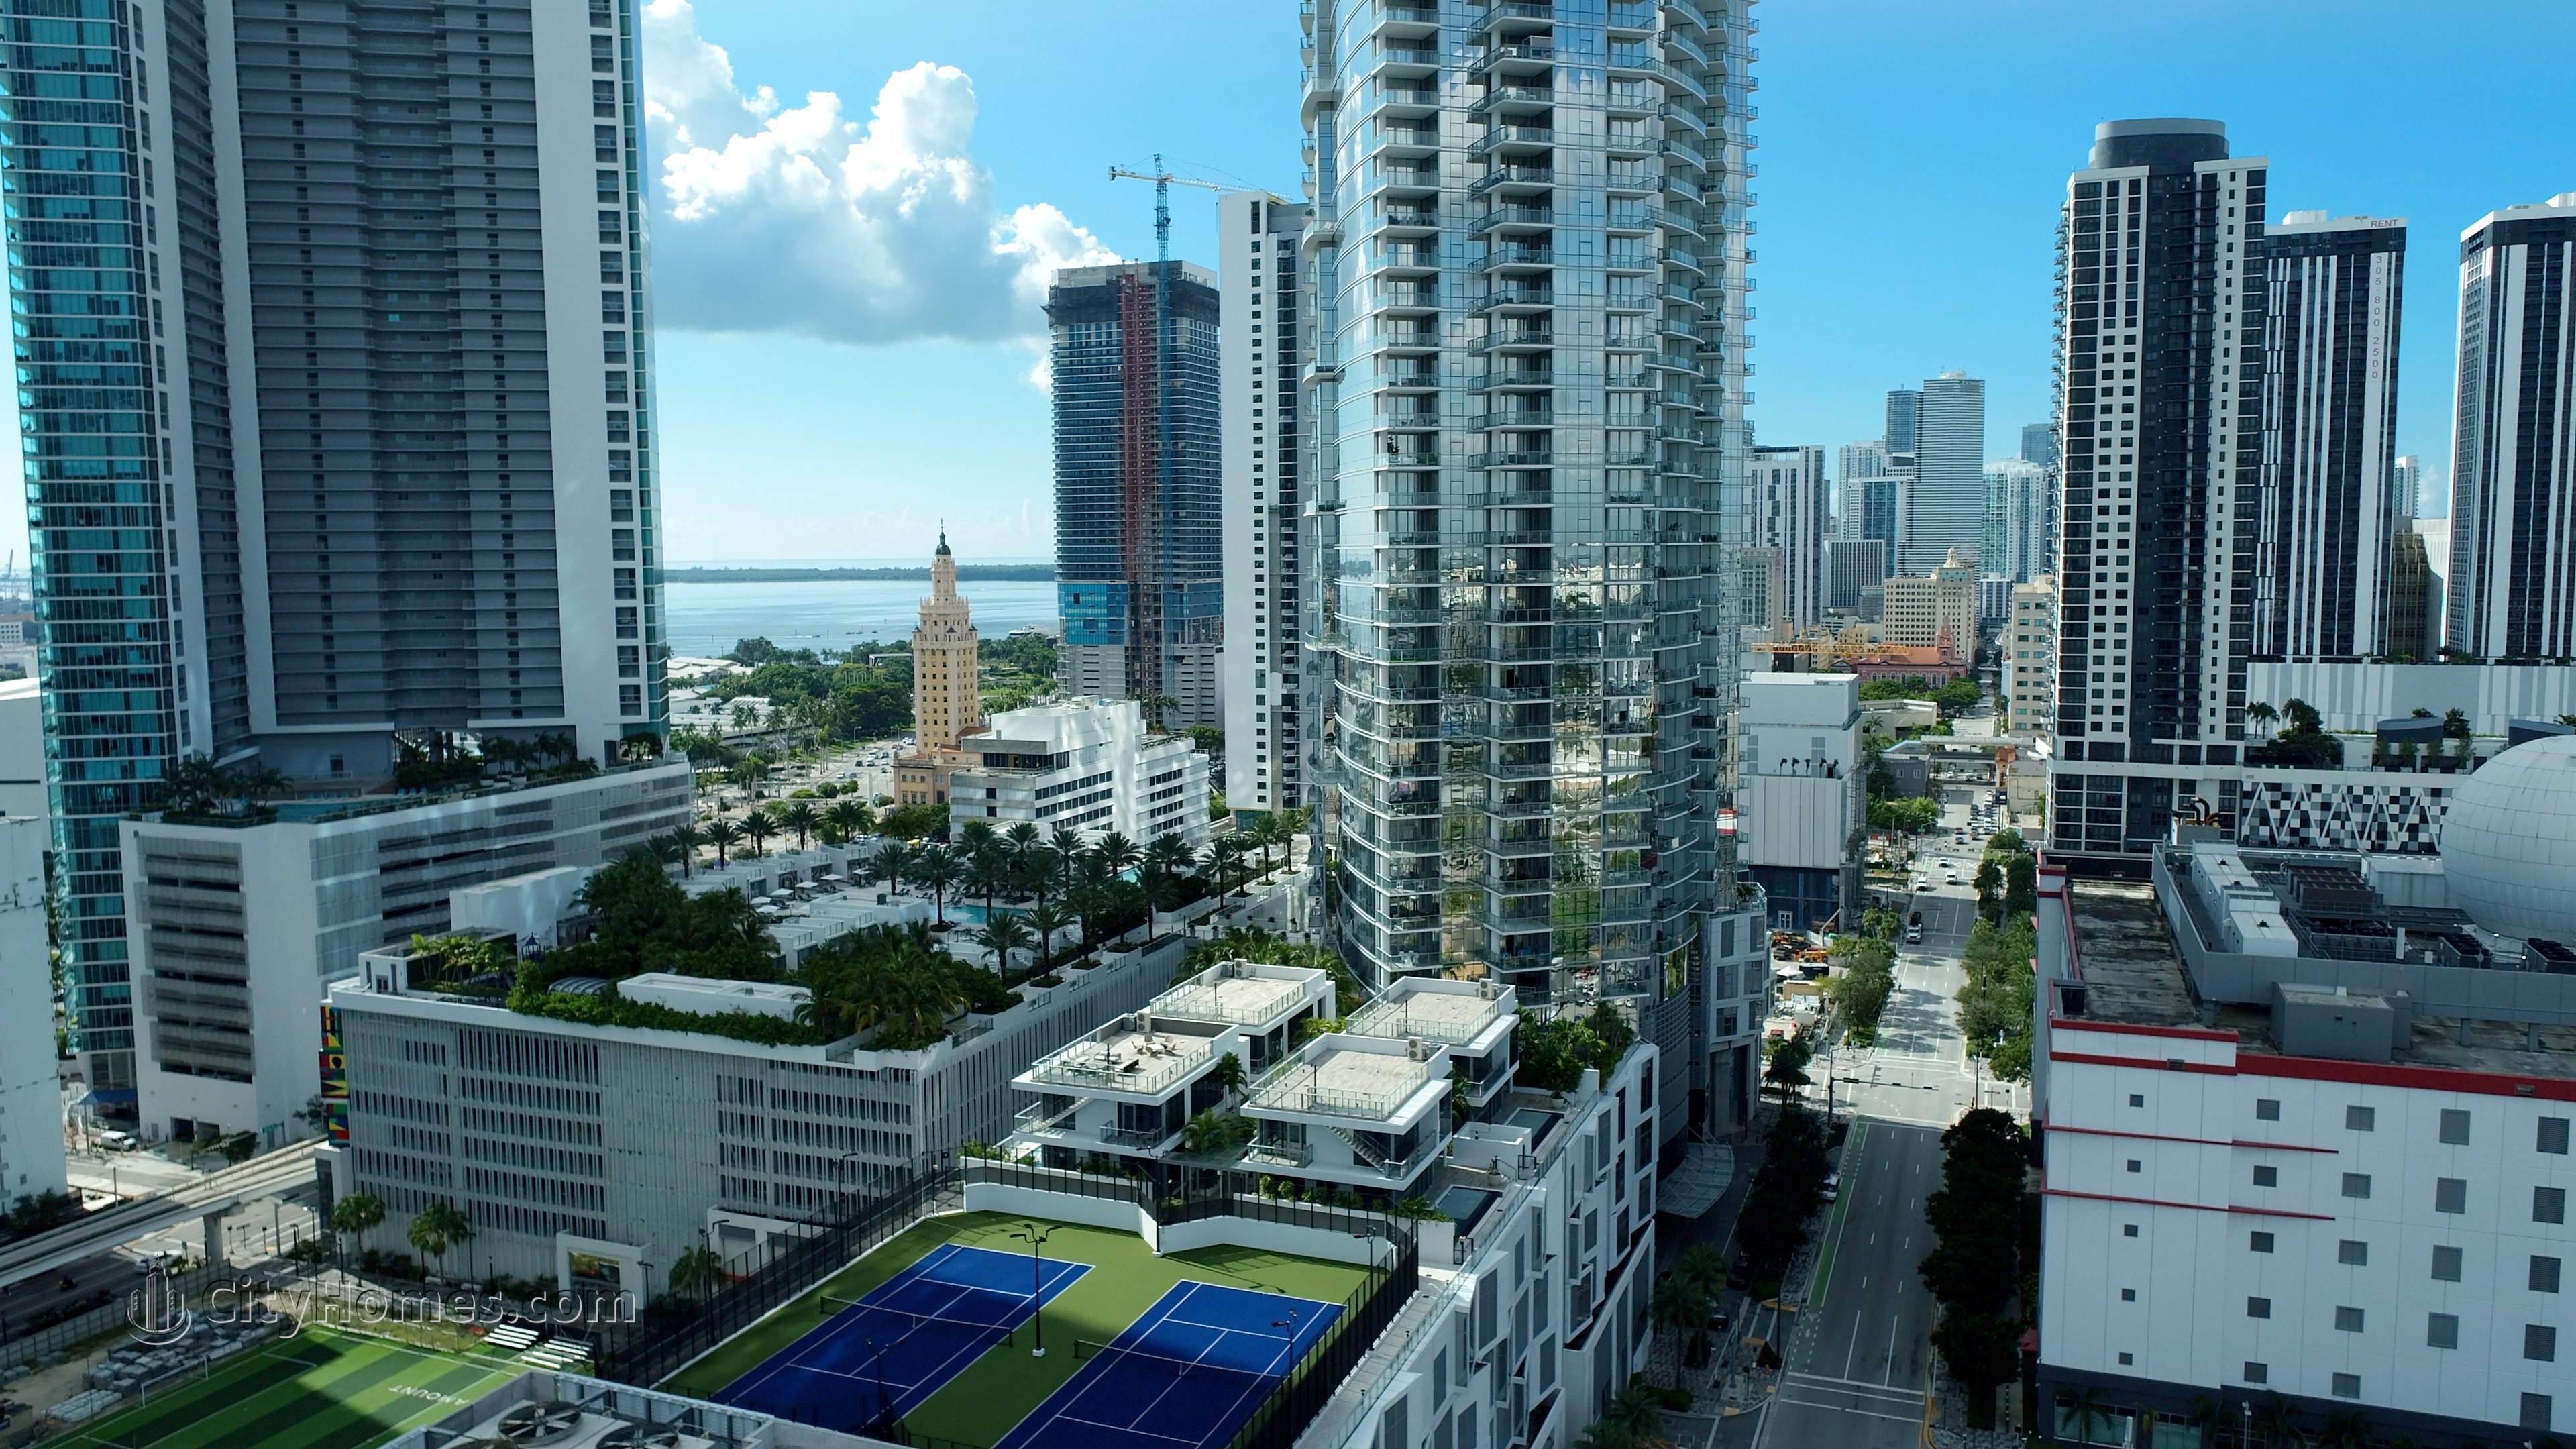 3. Paramount Miami Worldcenter building at 851 NE 1st Avenue, Park West, Miami, FL 33132